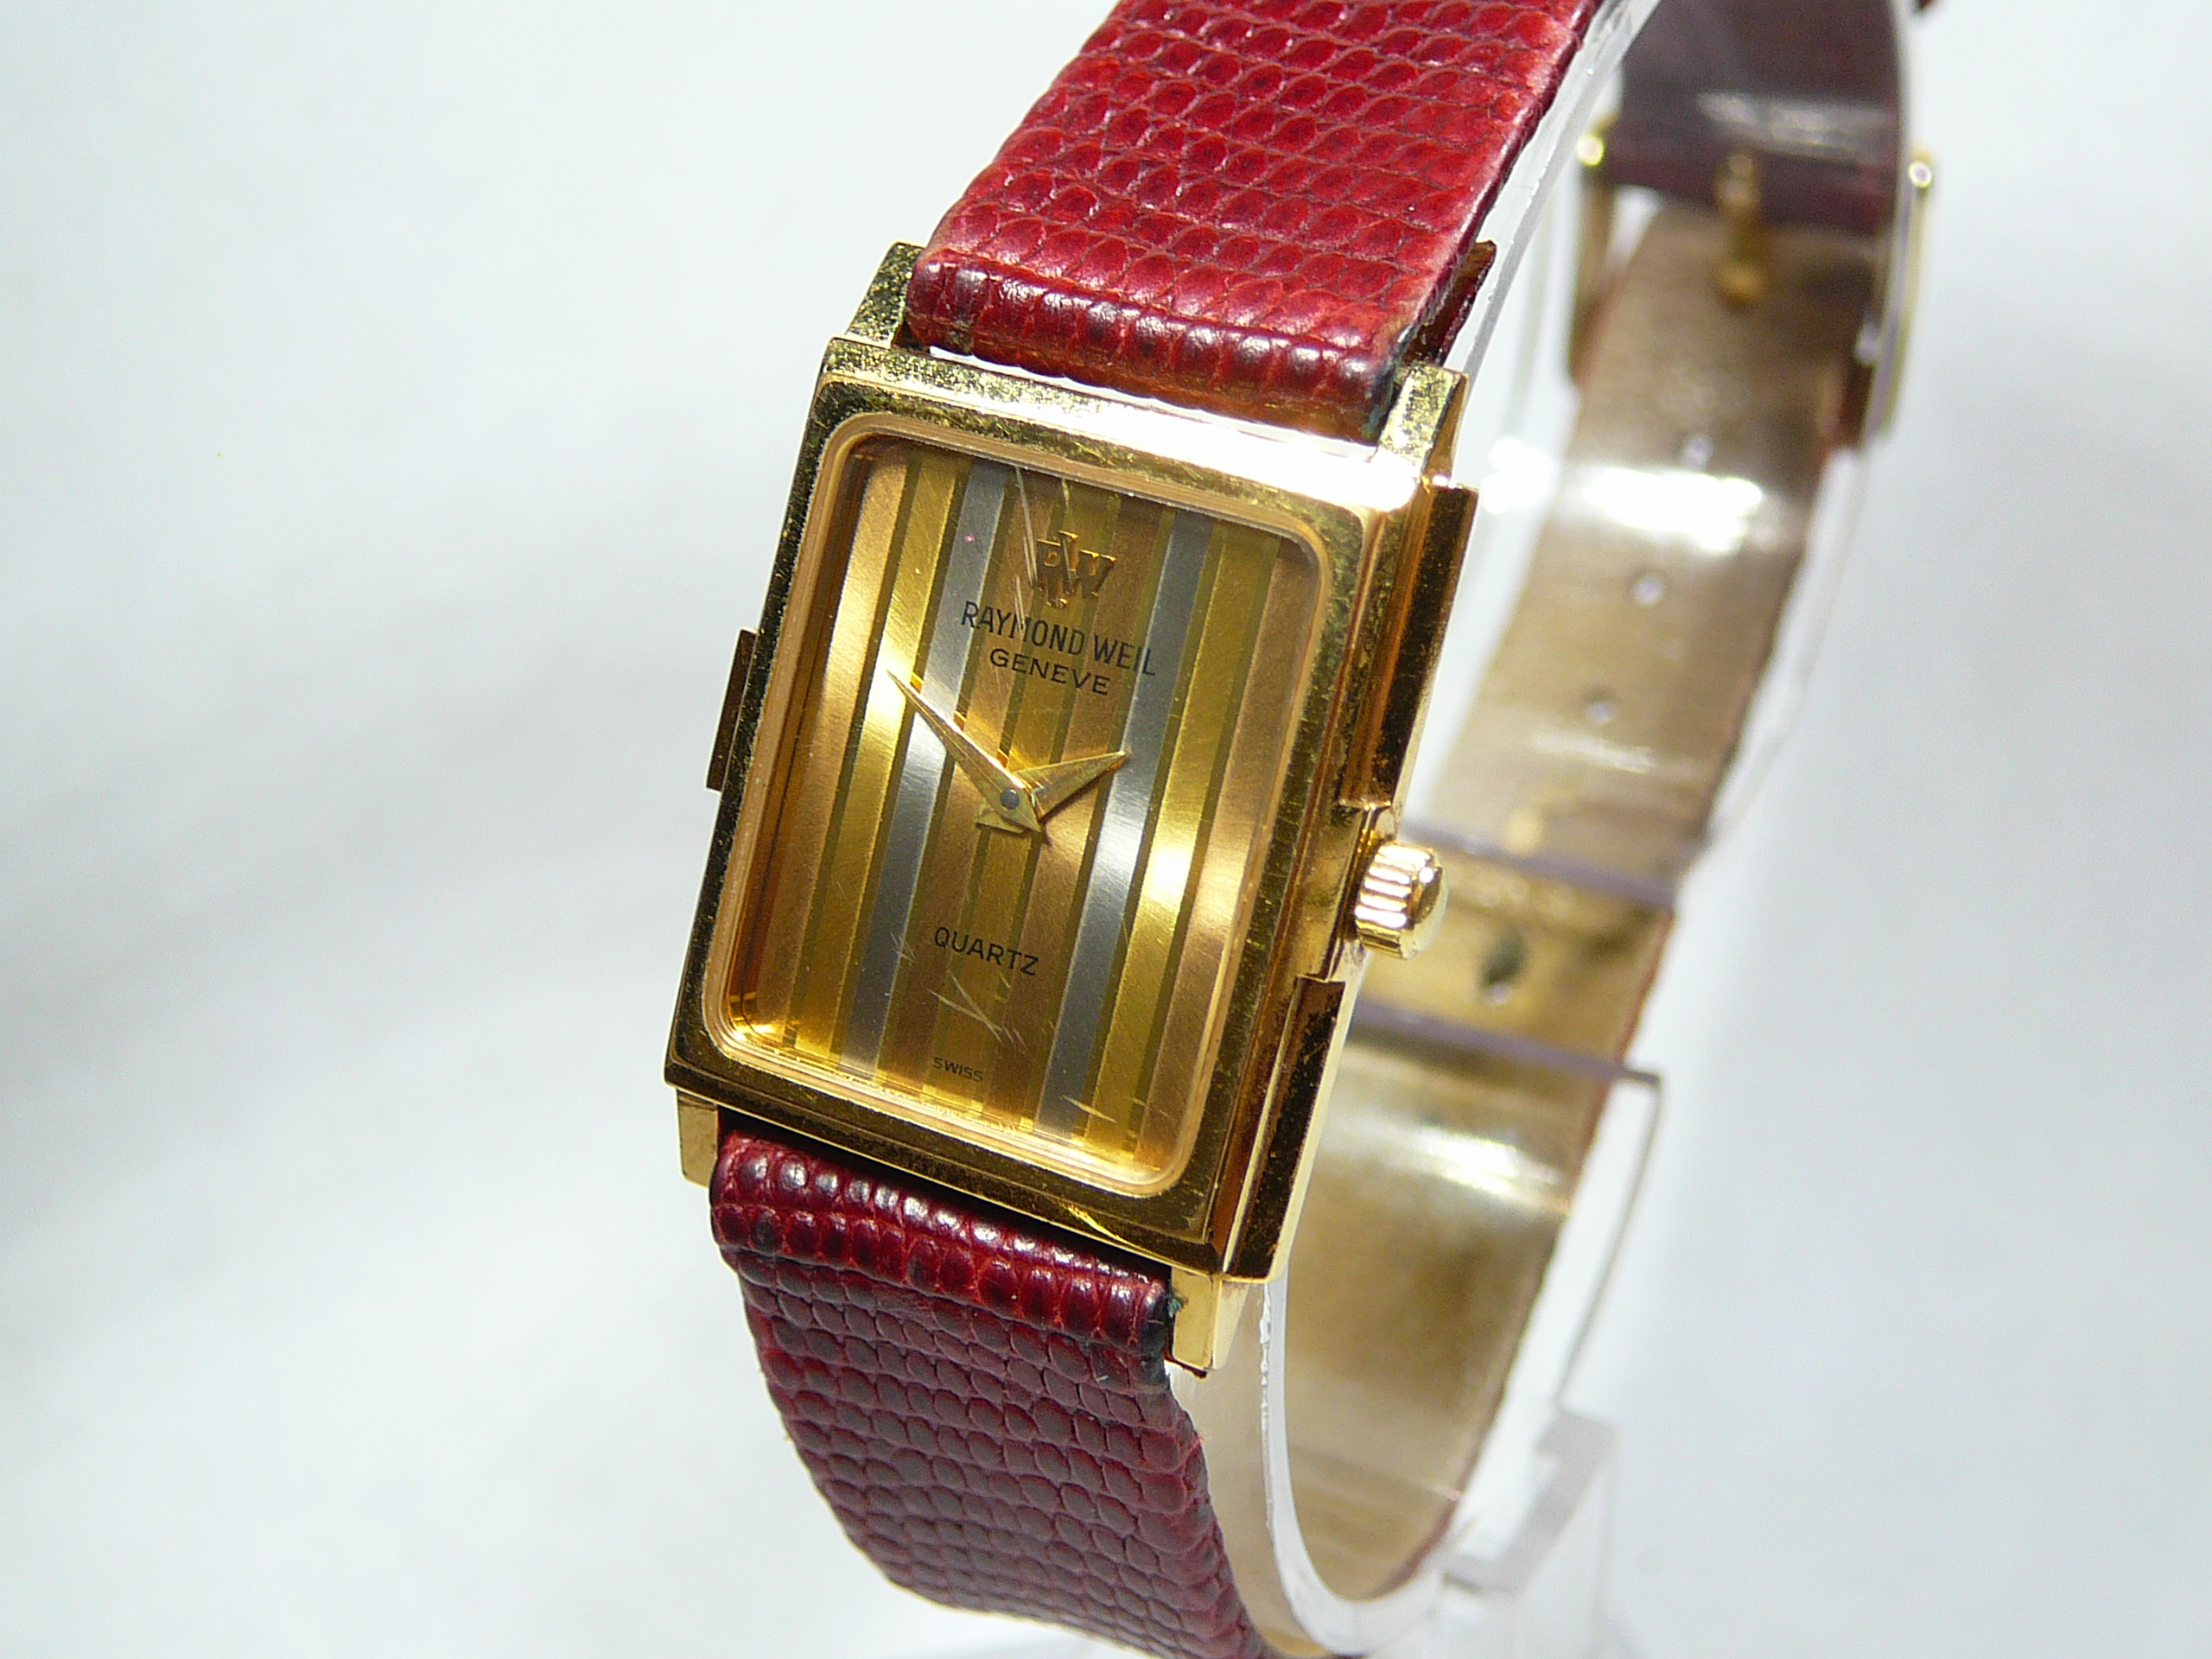 Ladies Raymond Weil Wrist Watch - Image 2 of 3